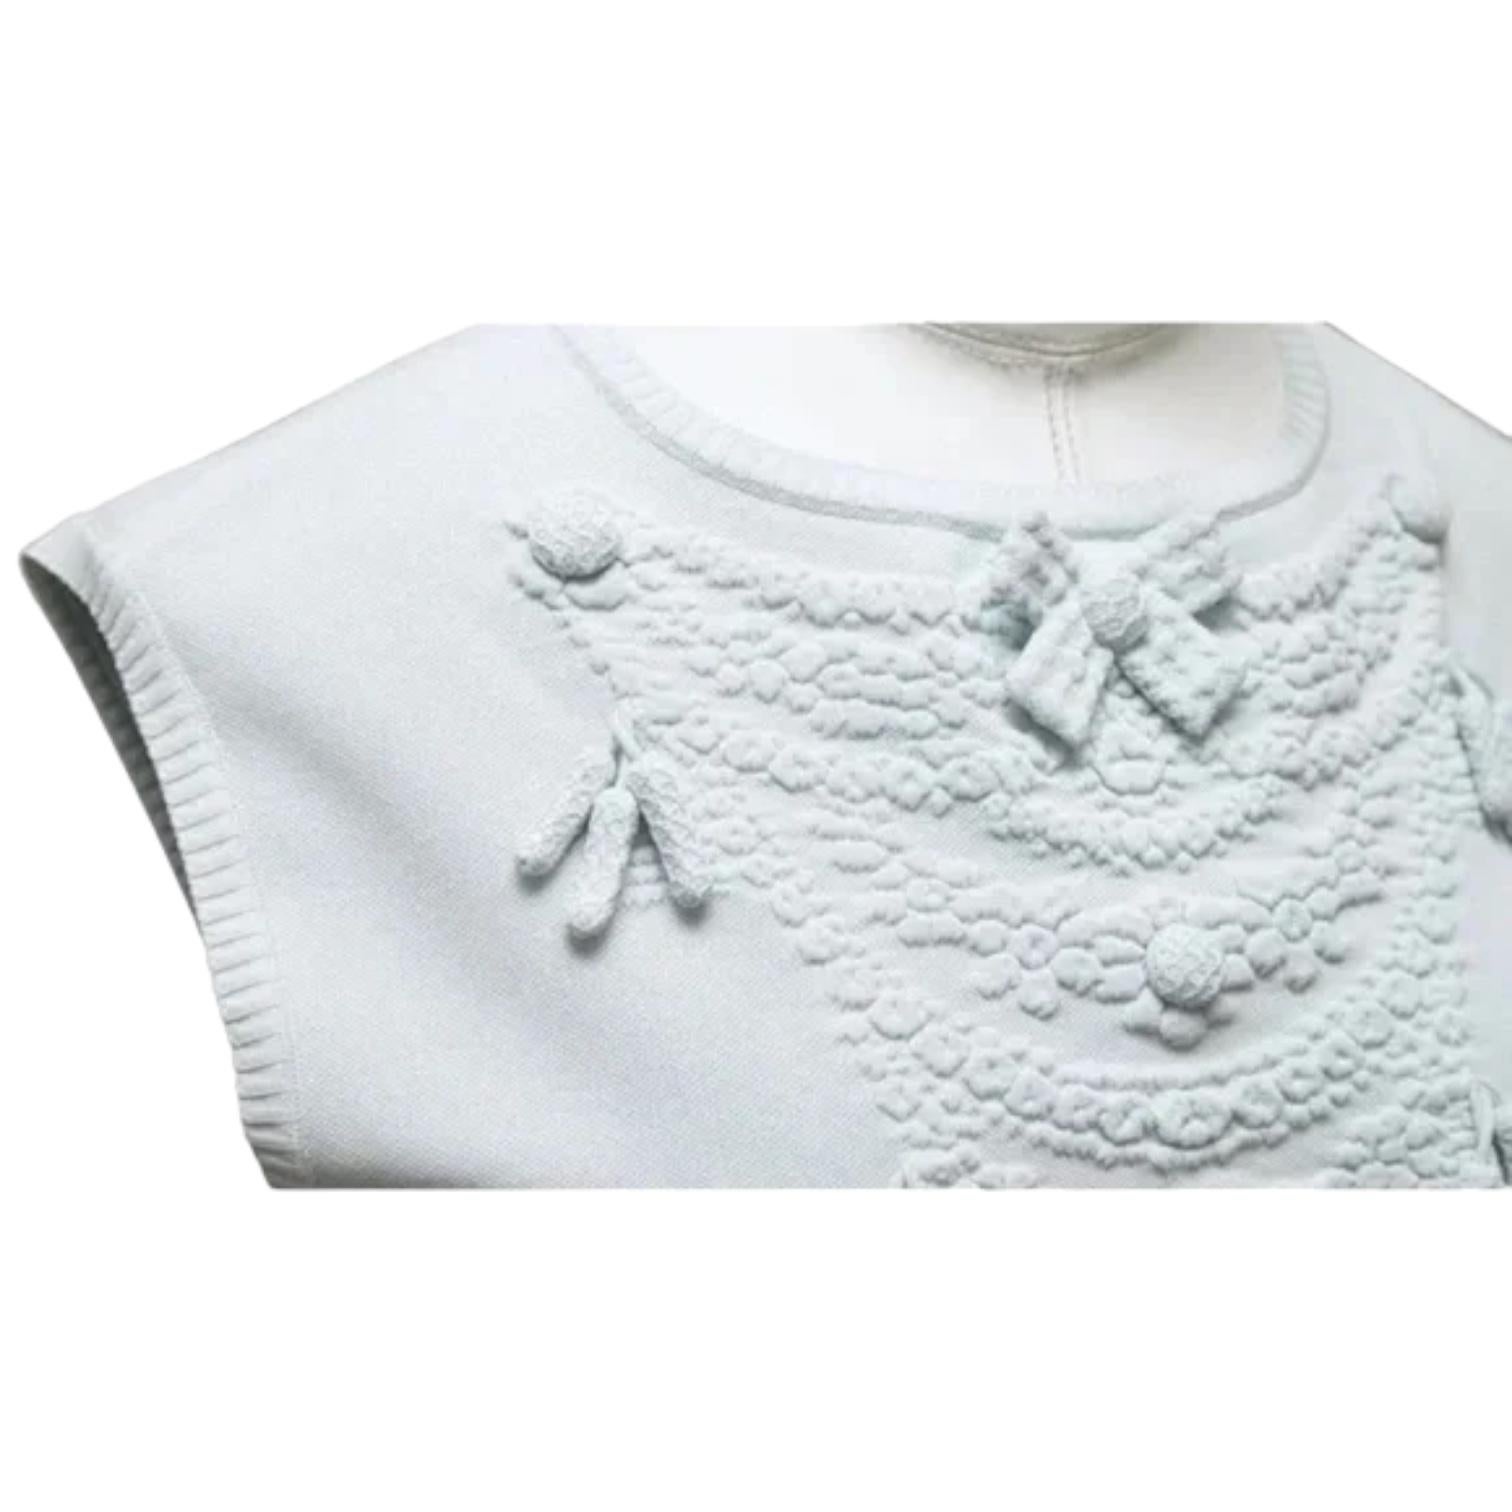 CHANEL Sweater Knit Top Blue Sleeveless Bateau Neck Bow Tassel Sz 40 13C 2013 2